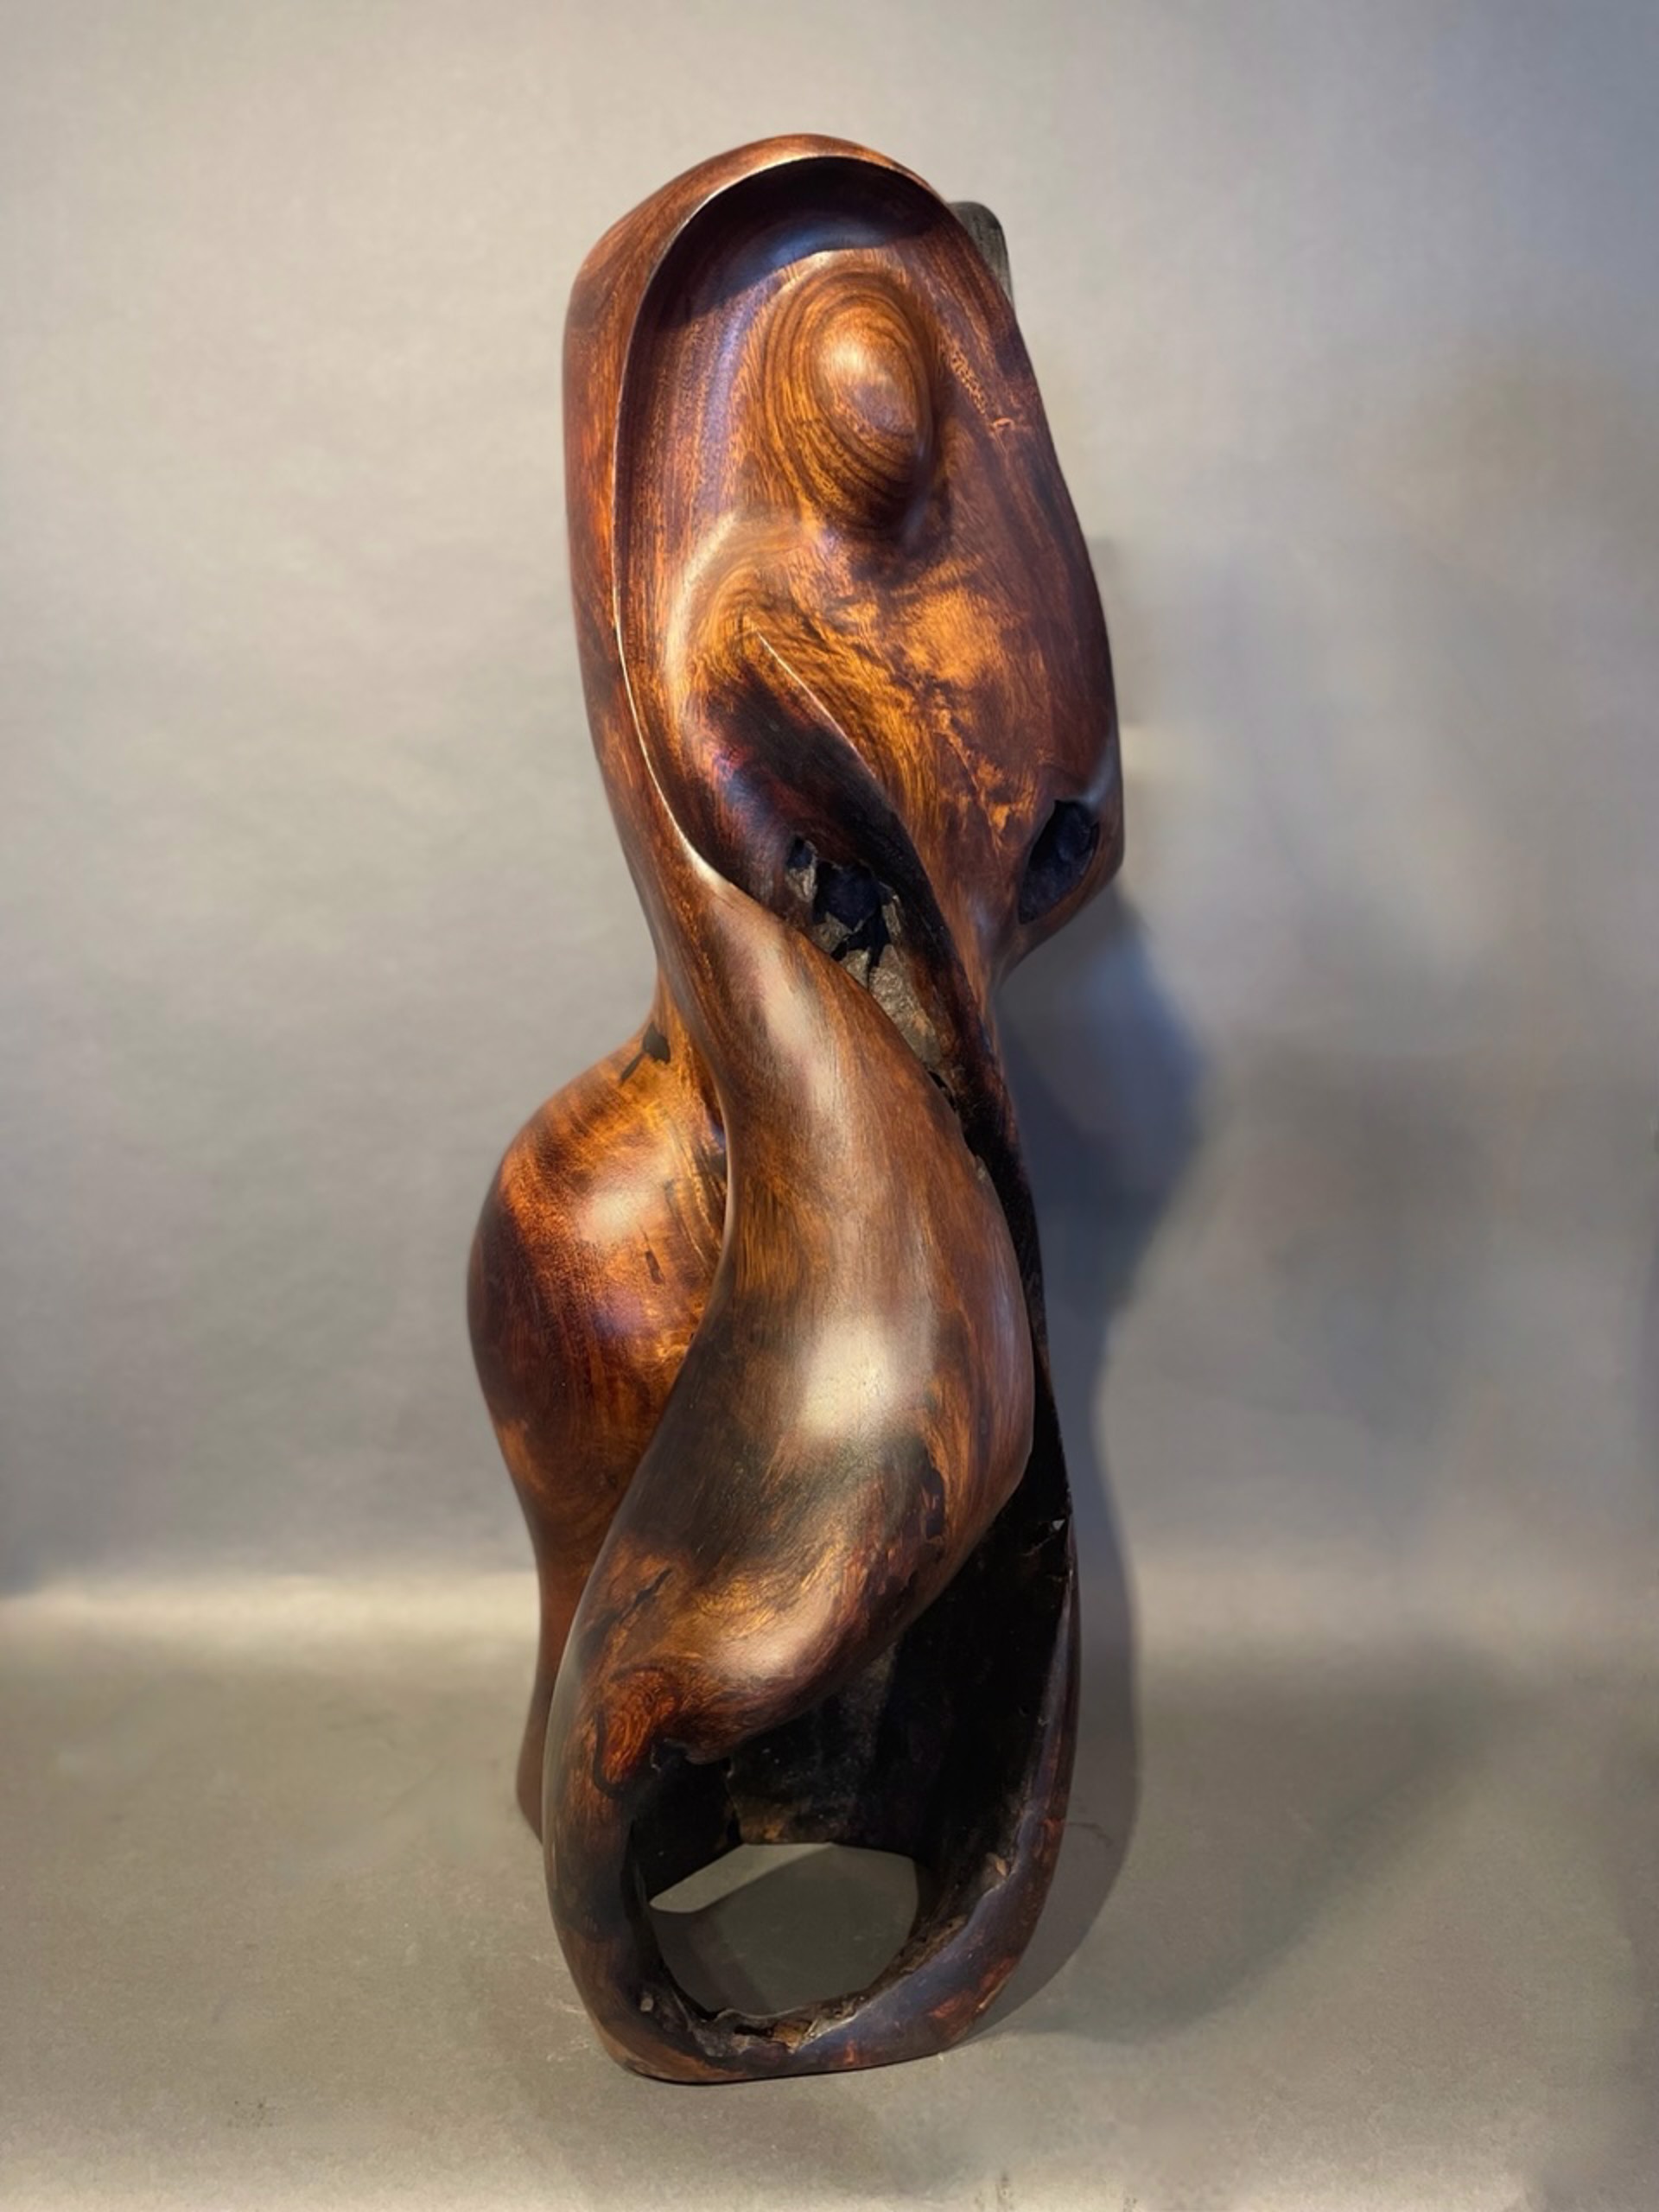 Beauty Within (Ohai Wood) by Steve Turnbull